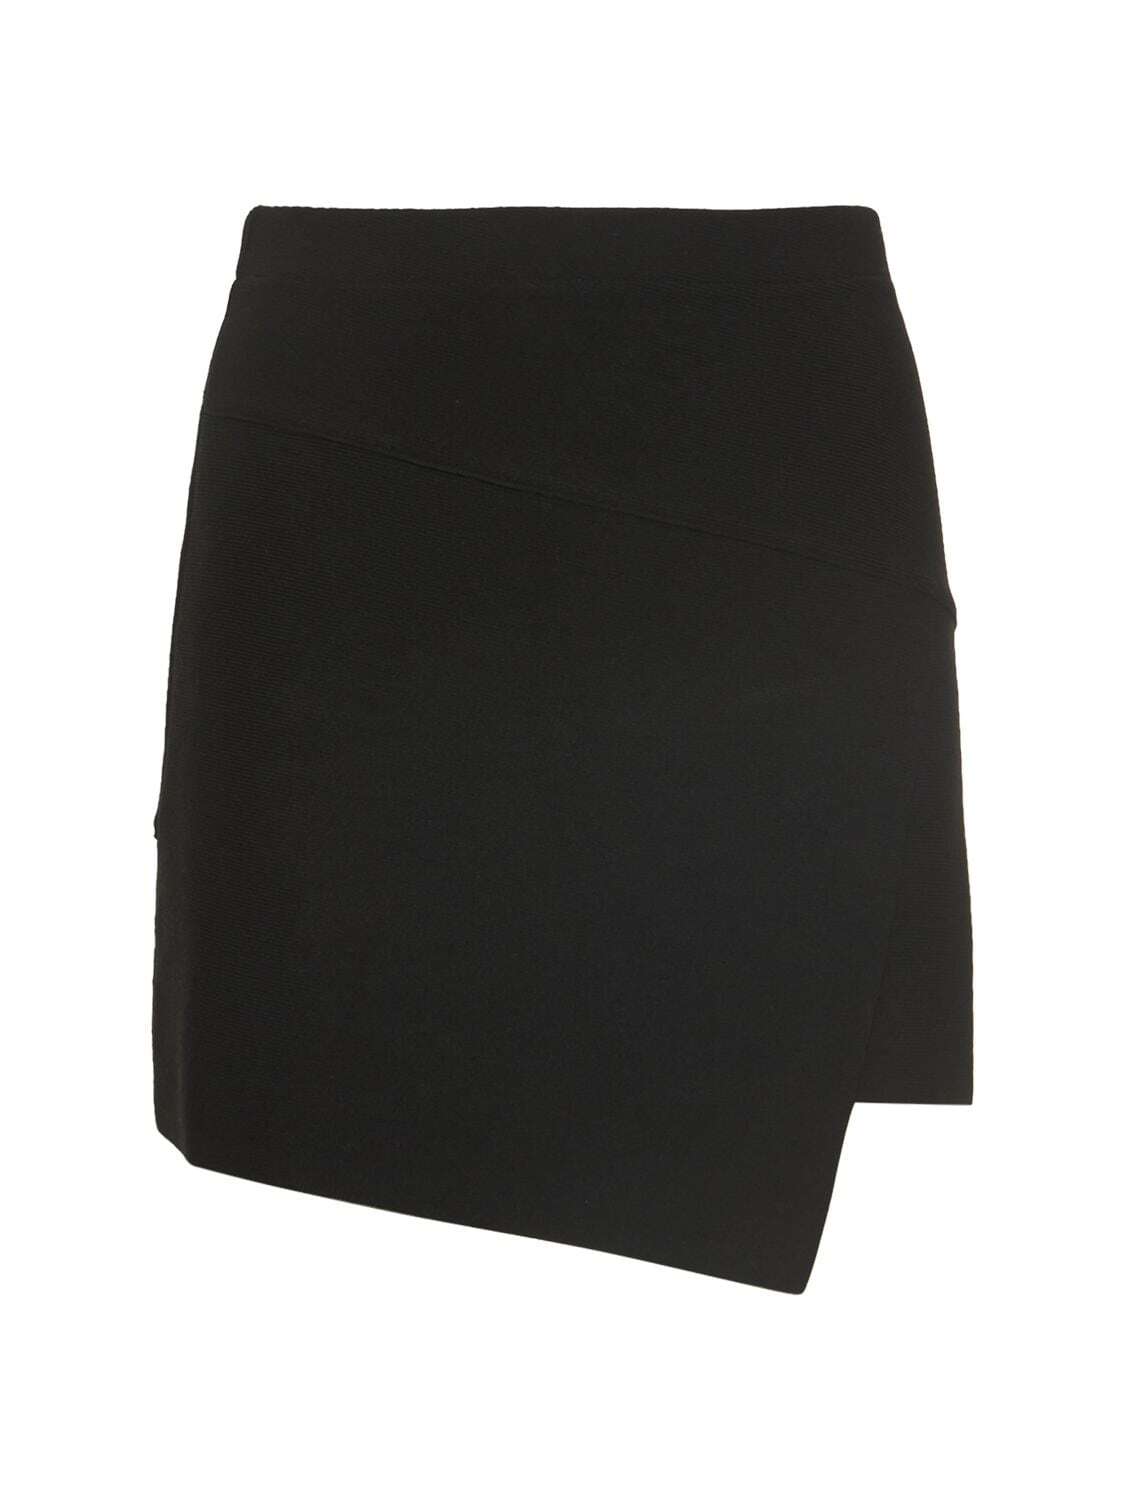 ANDREADAMO Stretch Knit A Line Mini Skirt in black